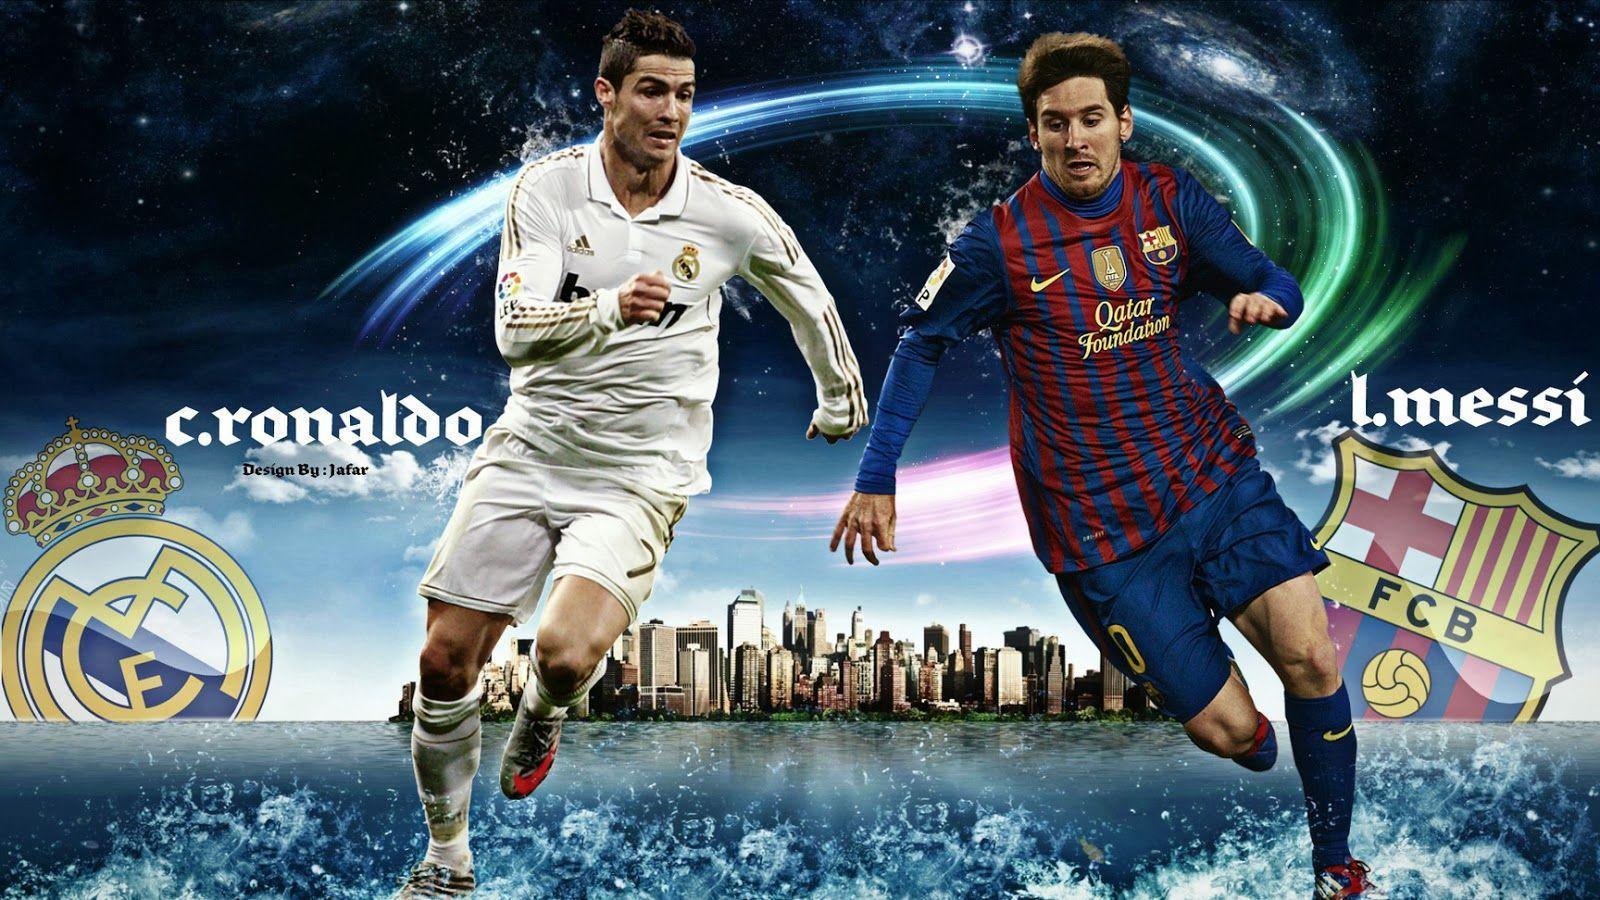 Messi Vs Ronaldo Wallpapers - Wallpaper Cave